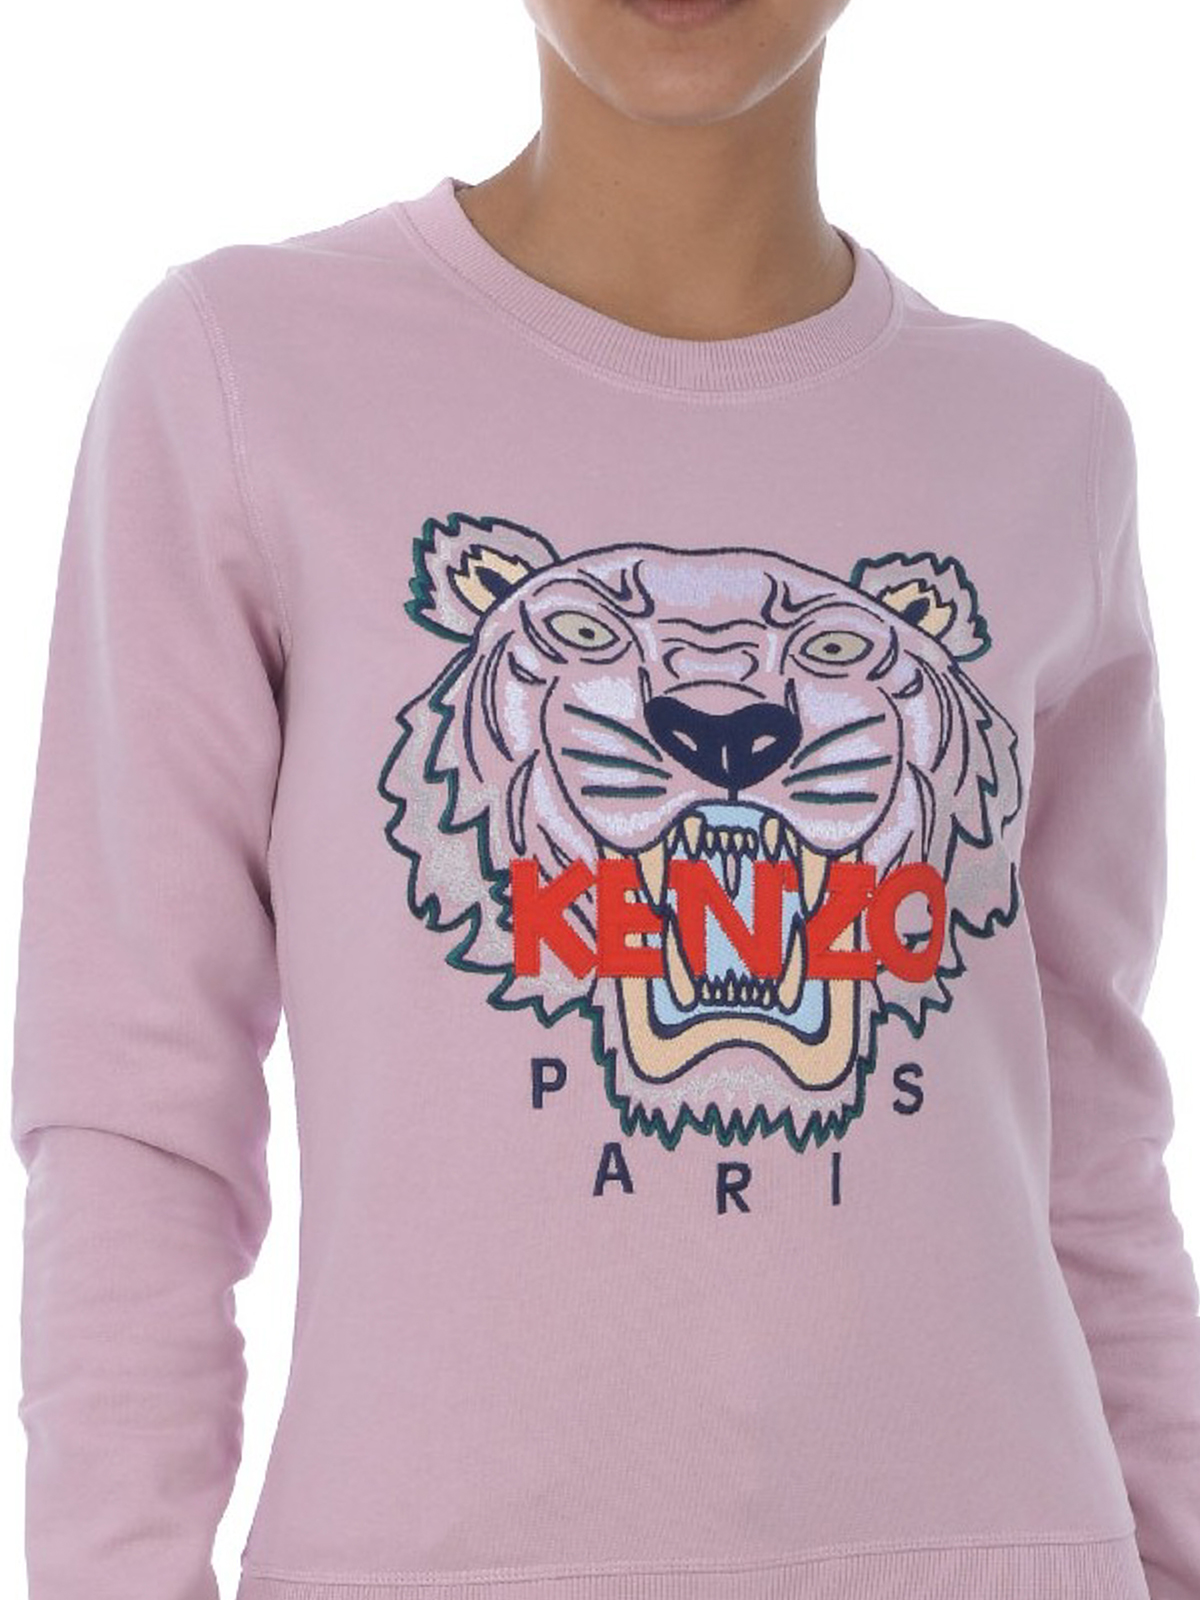 kenzo pink tiger sweatshirt